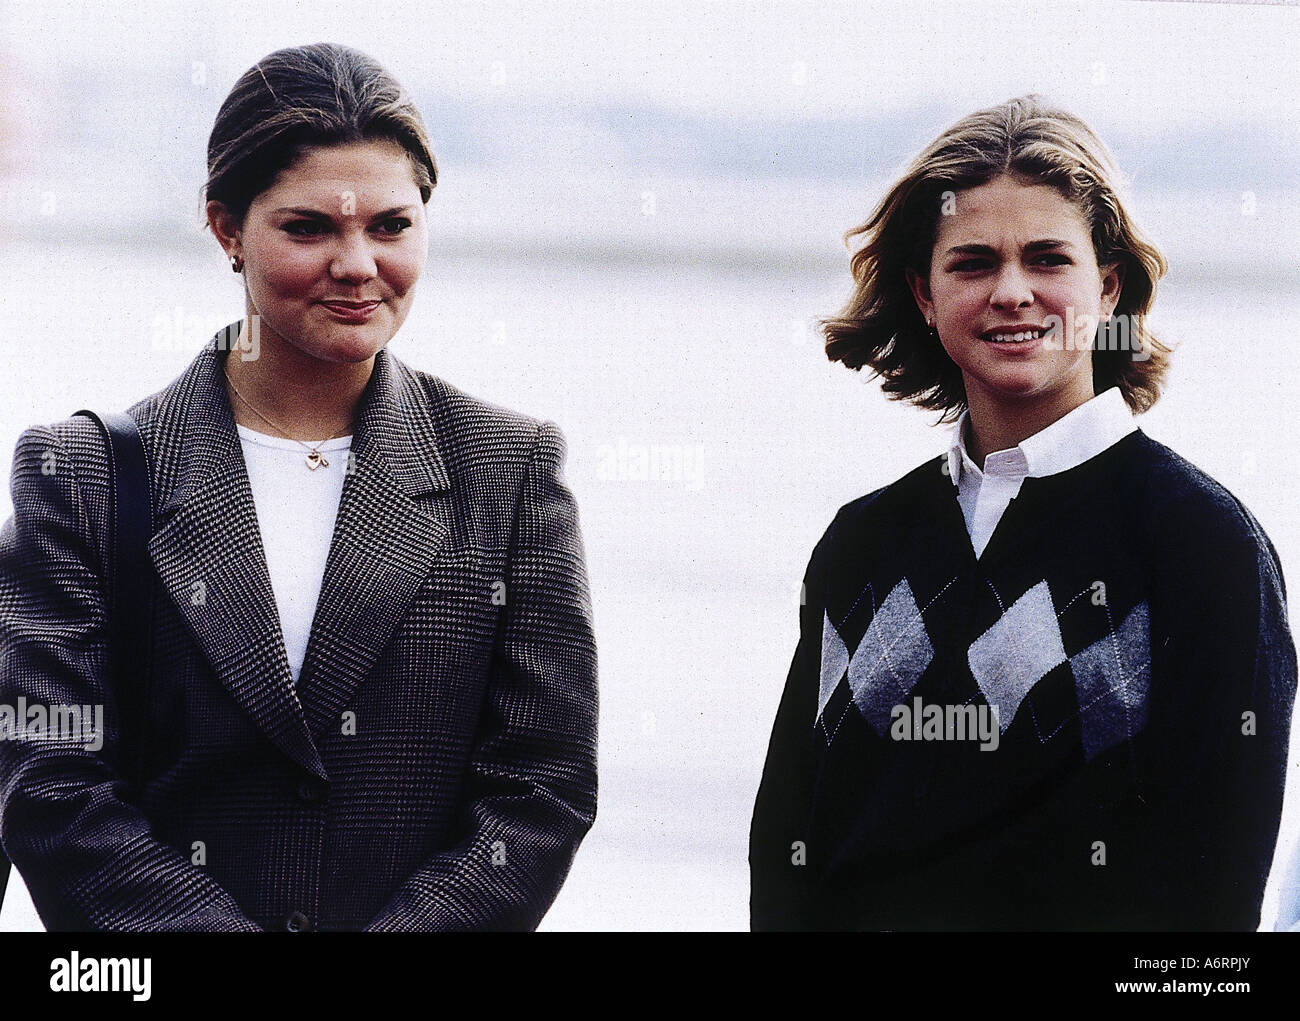 Victoria, * 14.7.1977, Crown Princess of Sweden since 1.1.1980, with her sister Madeleine, Munich, 30.10.1995, Bernadotte, Germa Stock Photo